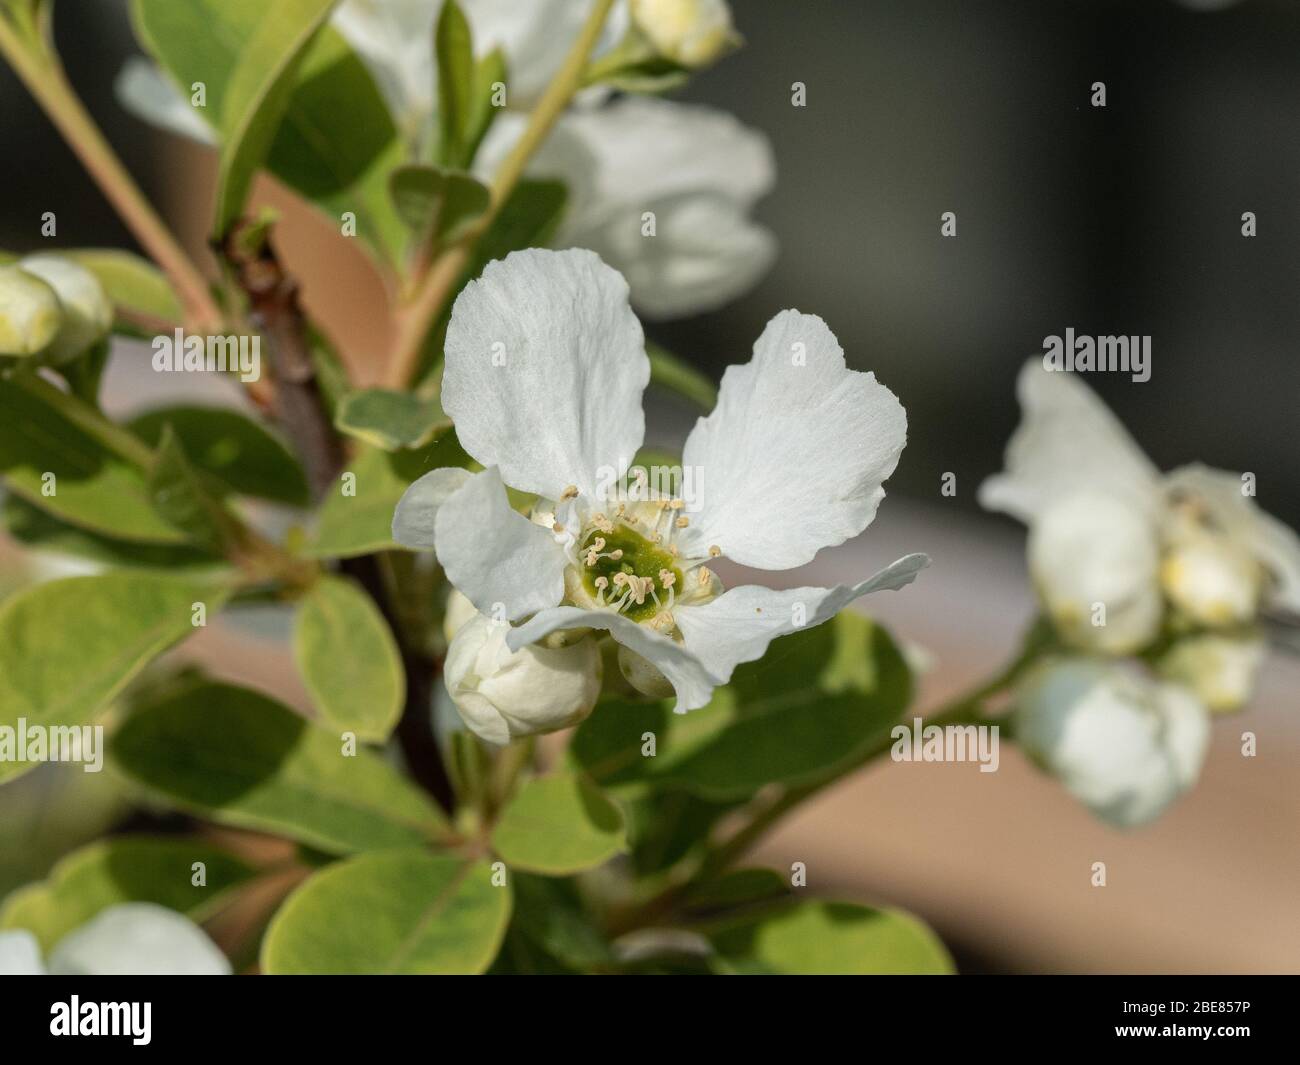 A close up of a single white flower of the shrub Exochorda grandiflora Niagara Stock Photo